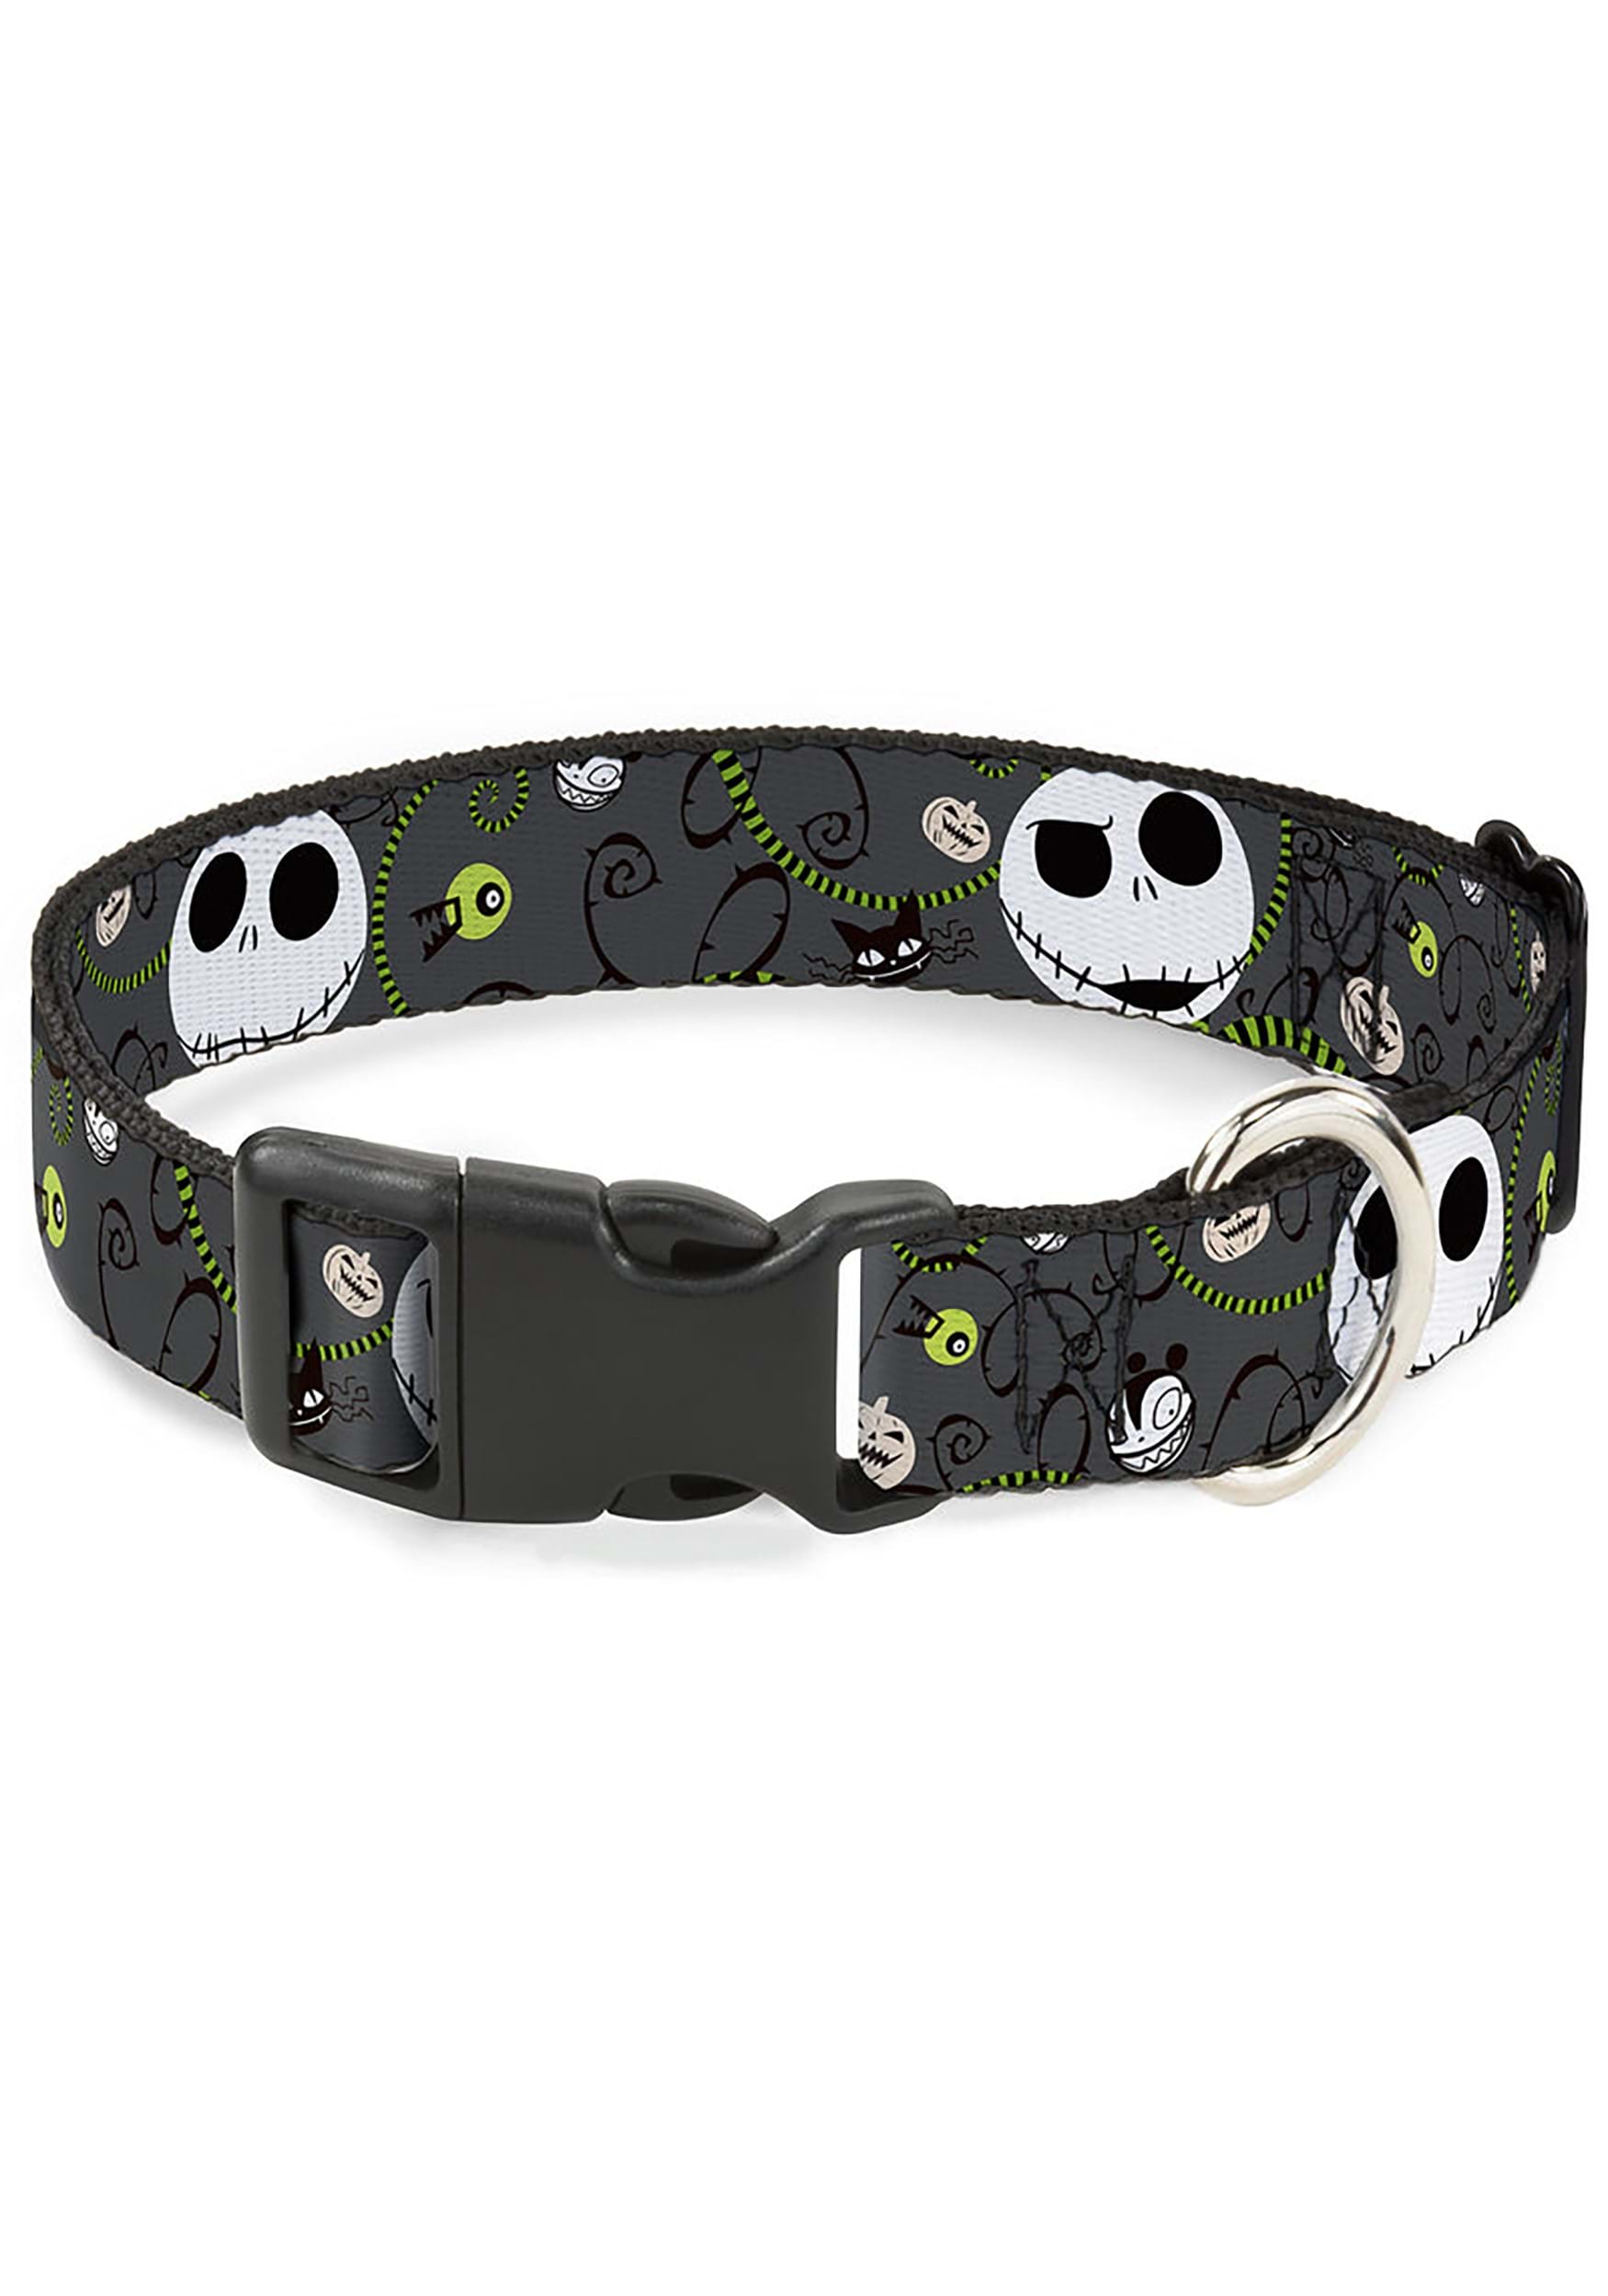 The Worthy Dog Jack-O-Lantern Slide-On Bandana Collar Accessory - Black - S